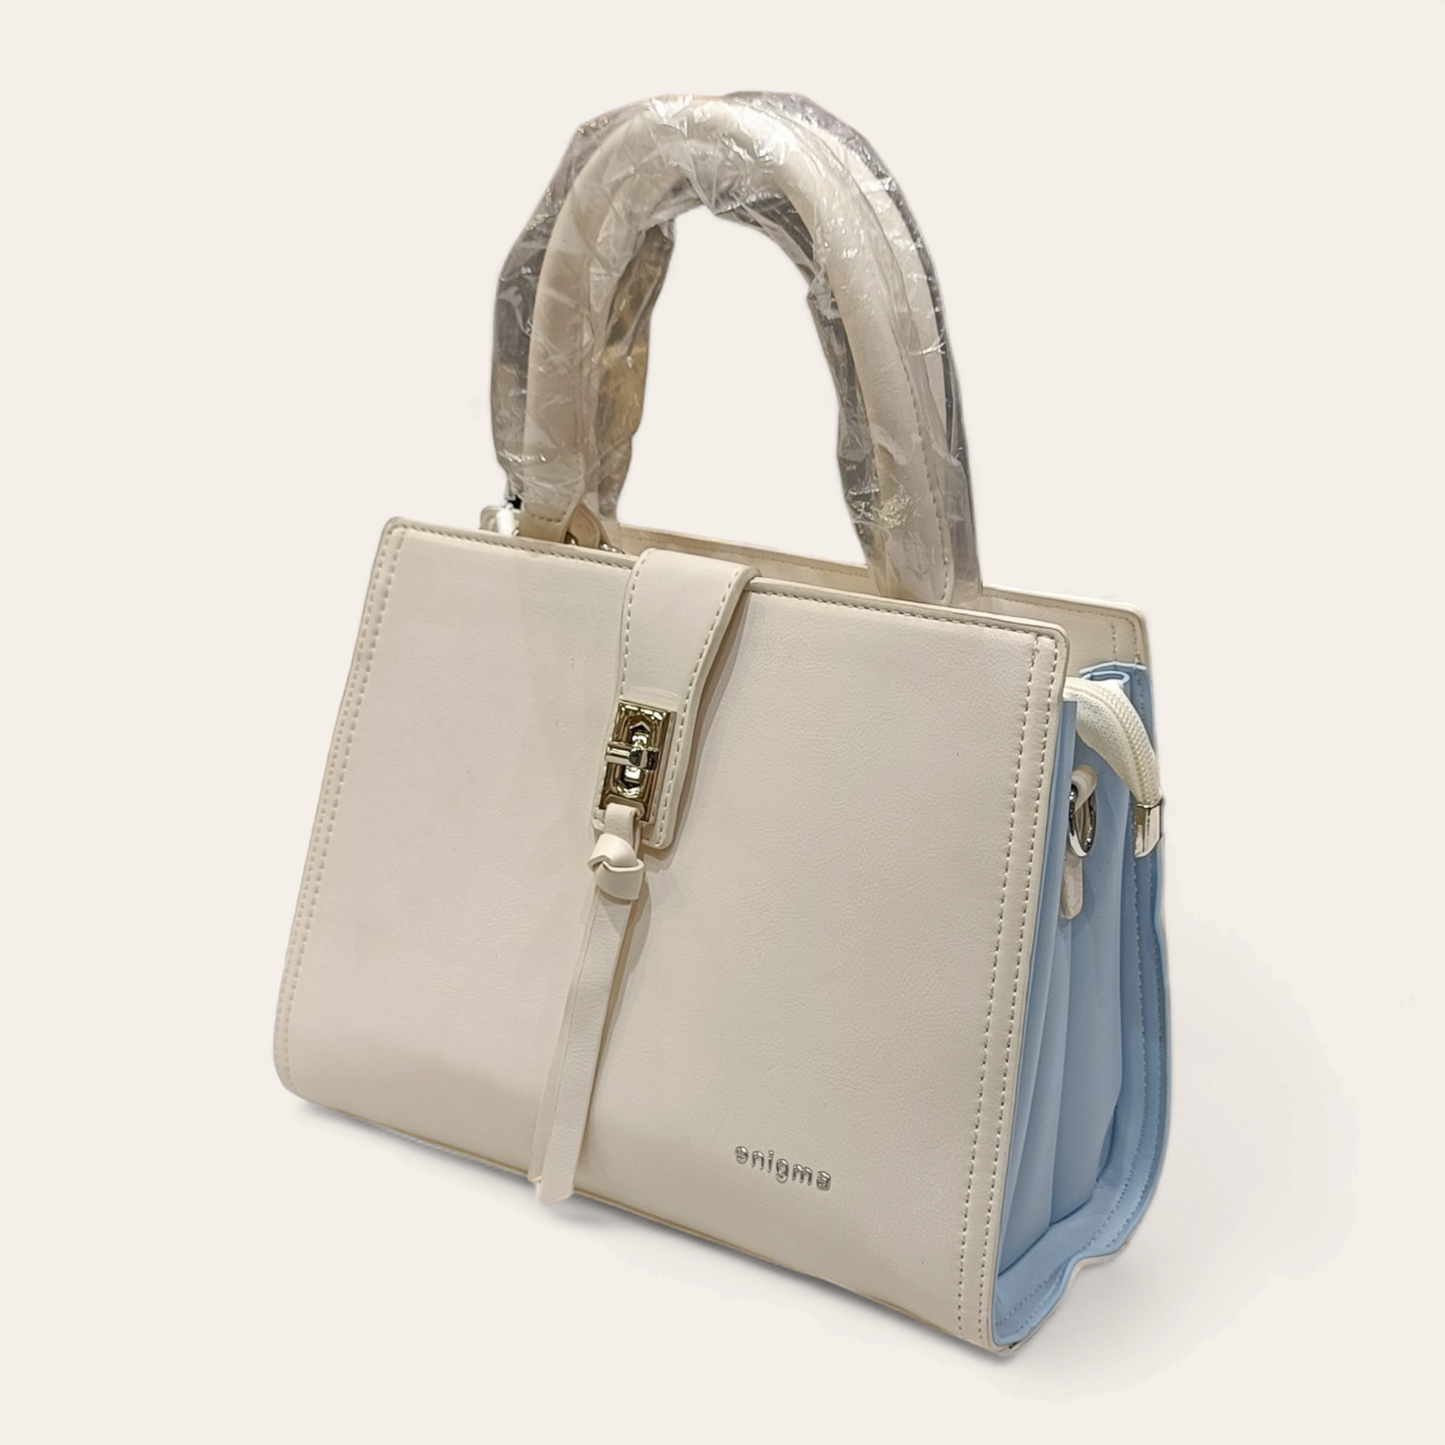 Enigma Party wear | Bridal handbag with sling belt